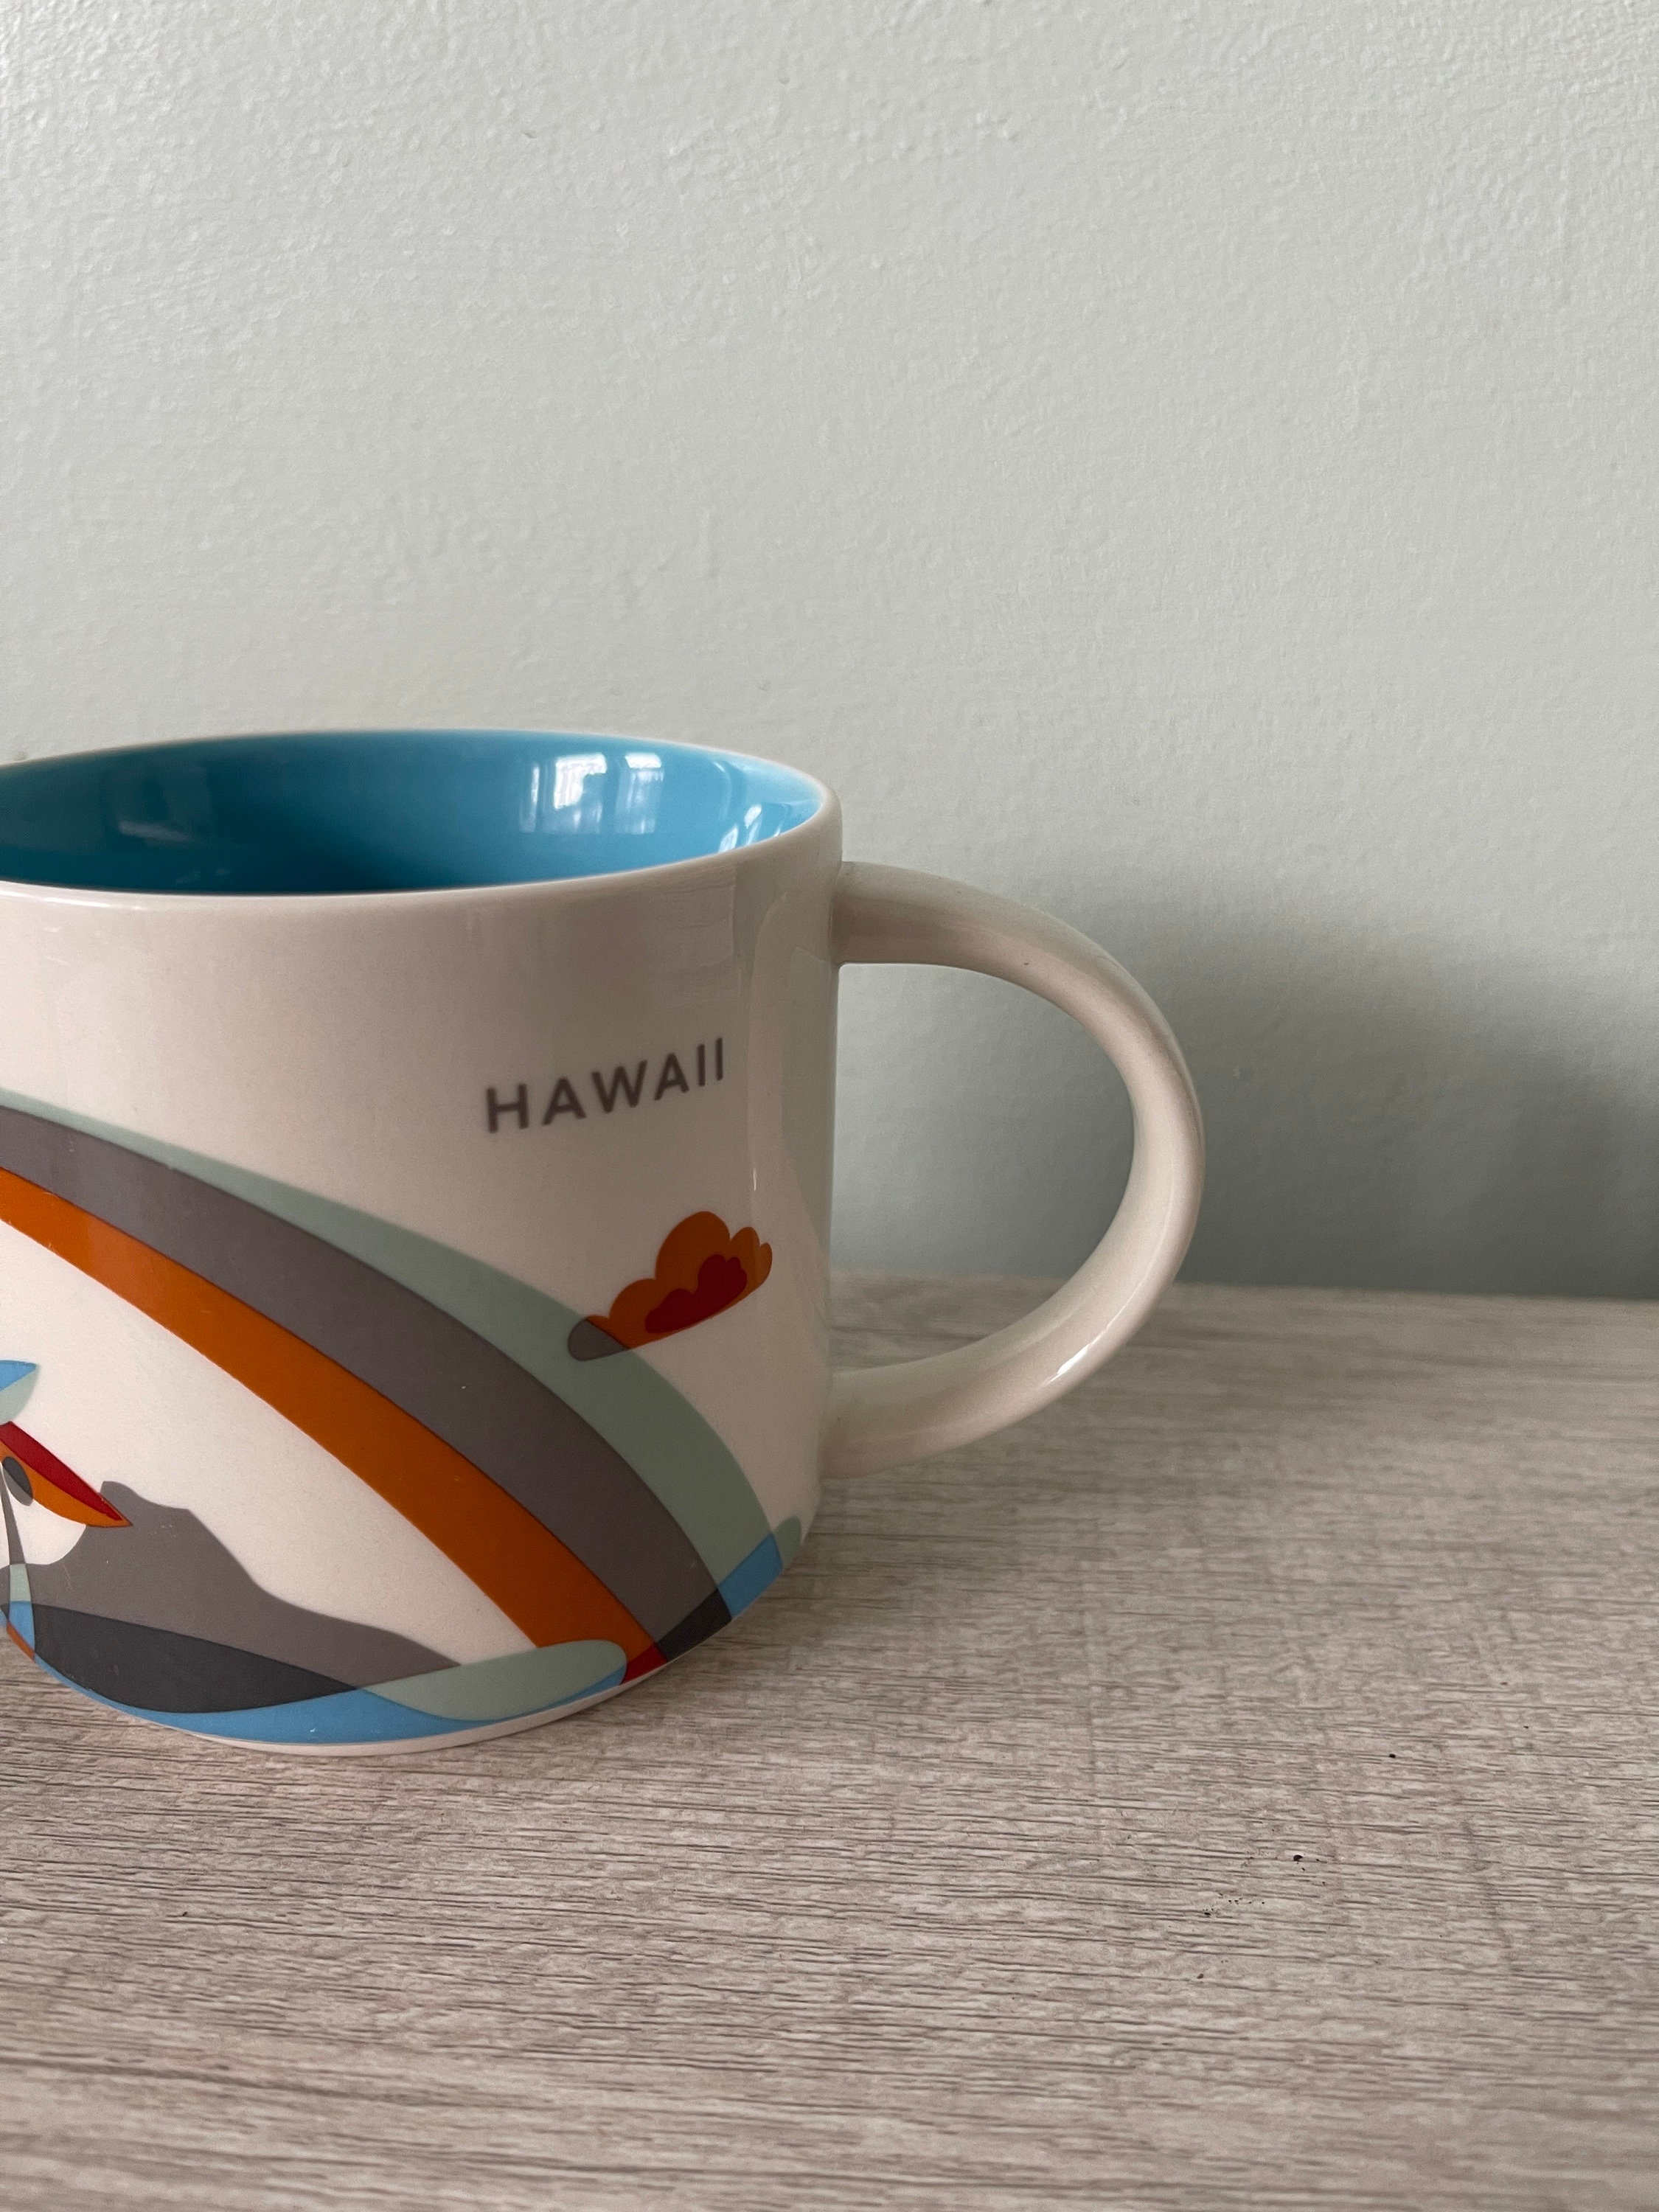 Starbucks HAWAII merchandise  mug, Starbucks, coffee, Oahu